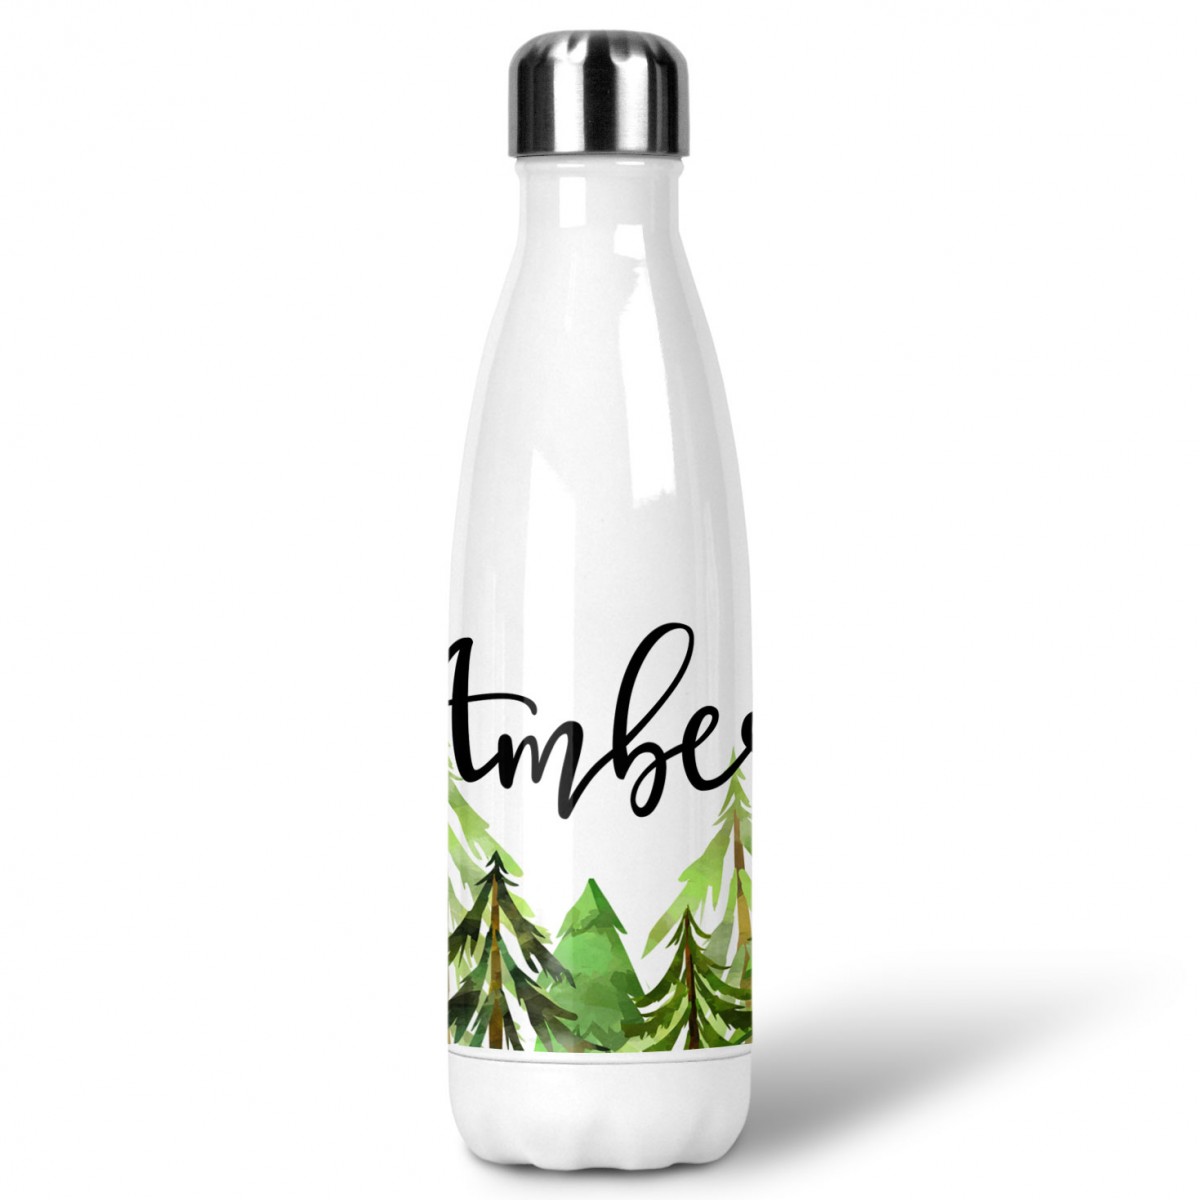 http://allseasongiftshop.com/wp-content/uploads/2018/08/pine-trees-water-bottle.jpg